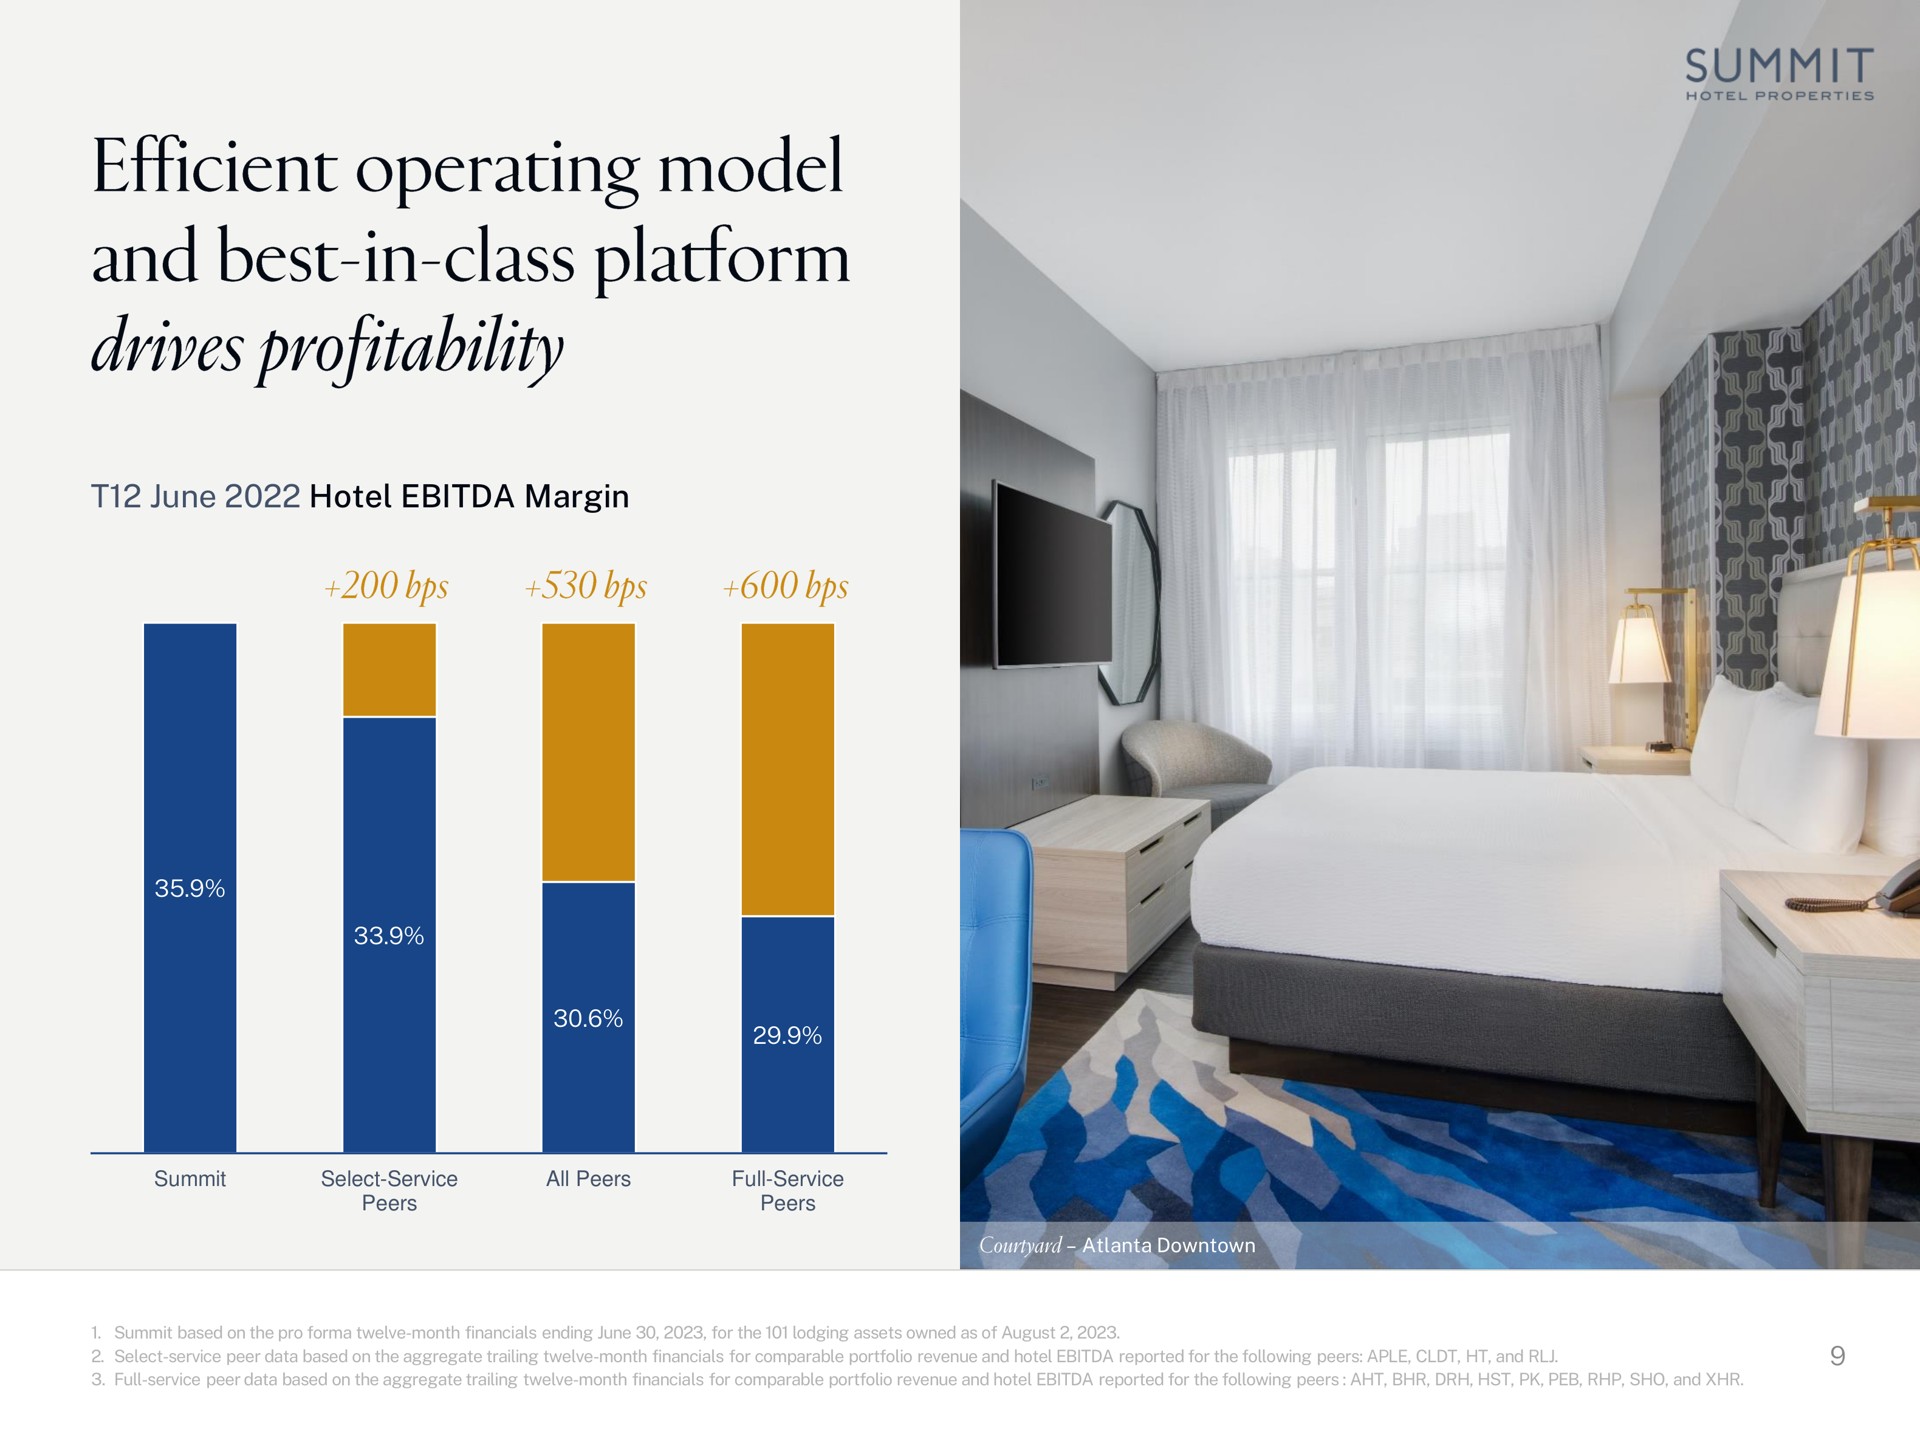 june hotel margin summit efficient operating model and best in class platform drives profitability | Summit Hotel Properties